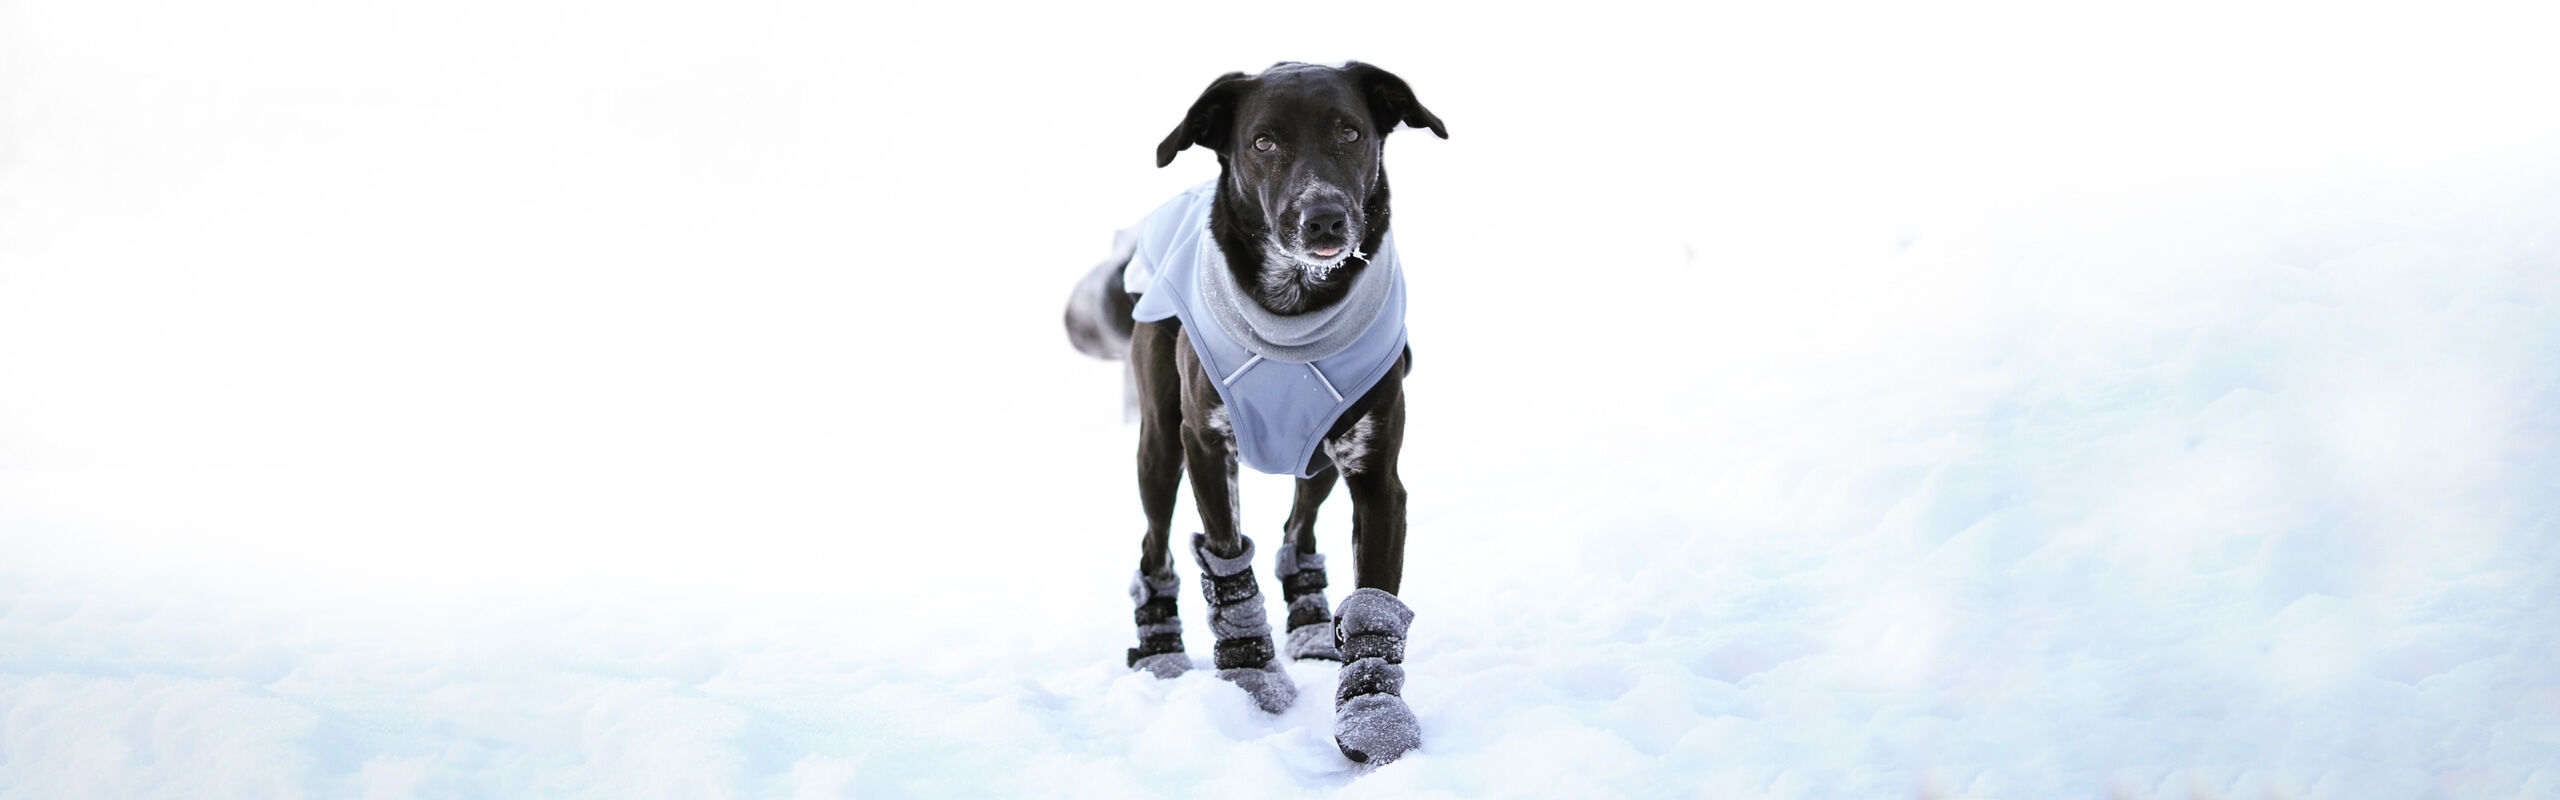 Hundeschuhe Pfotenschutz im Winter bei Salz und Streusalz